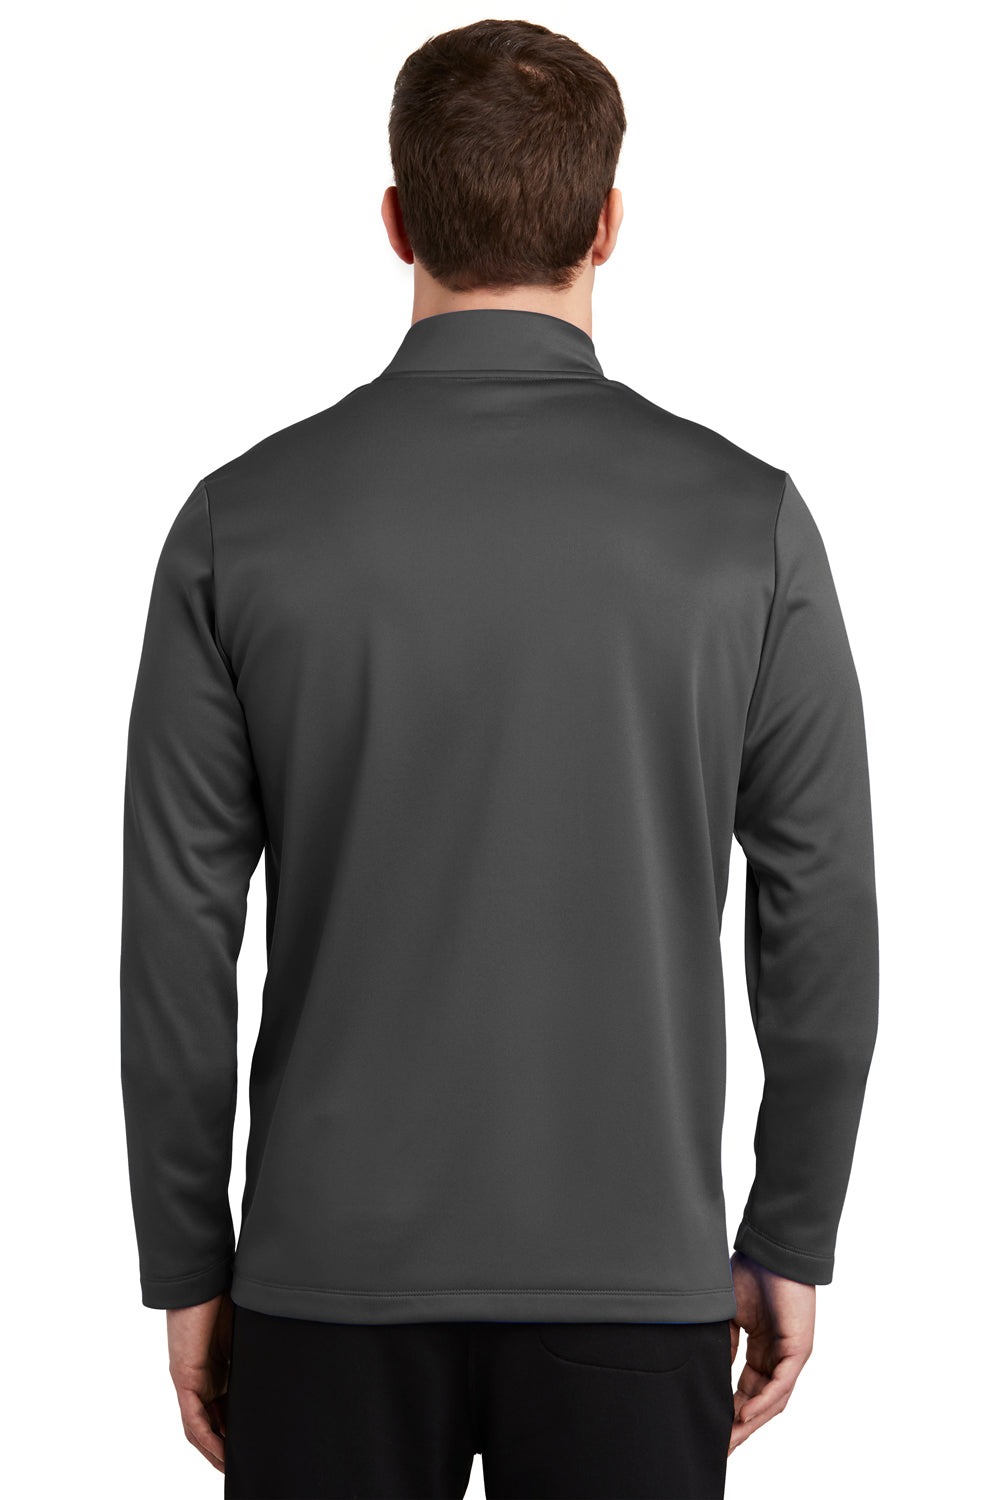 Nike NKAH6418 Mens Therma-Fit Moisture Wicking Fleece Full Zip Sweatshirt Anthracite Grey Model Back